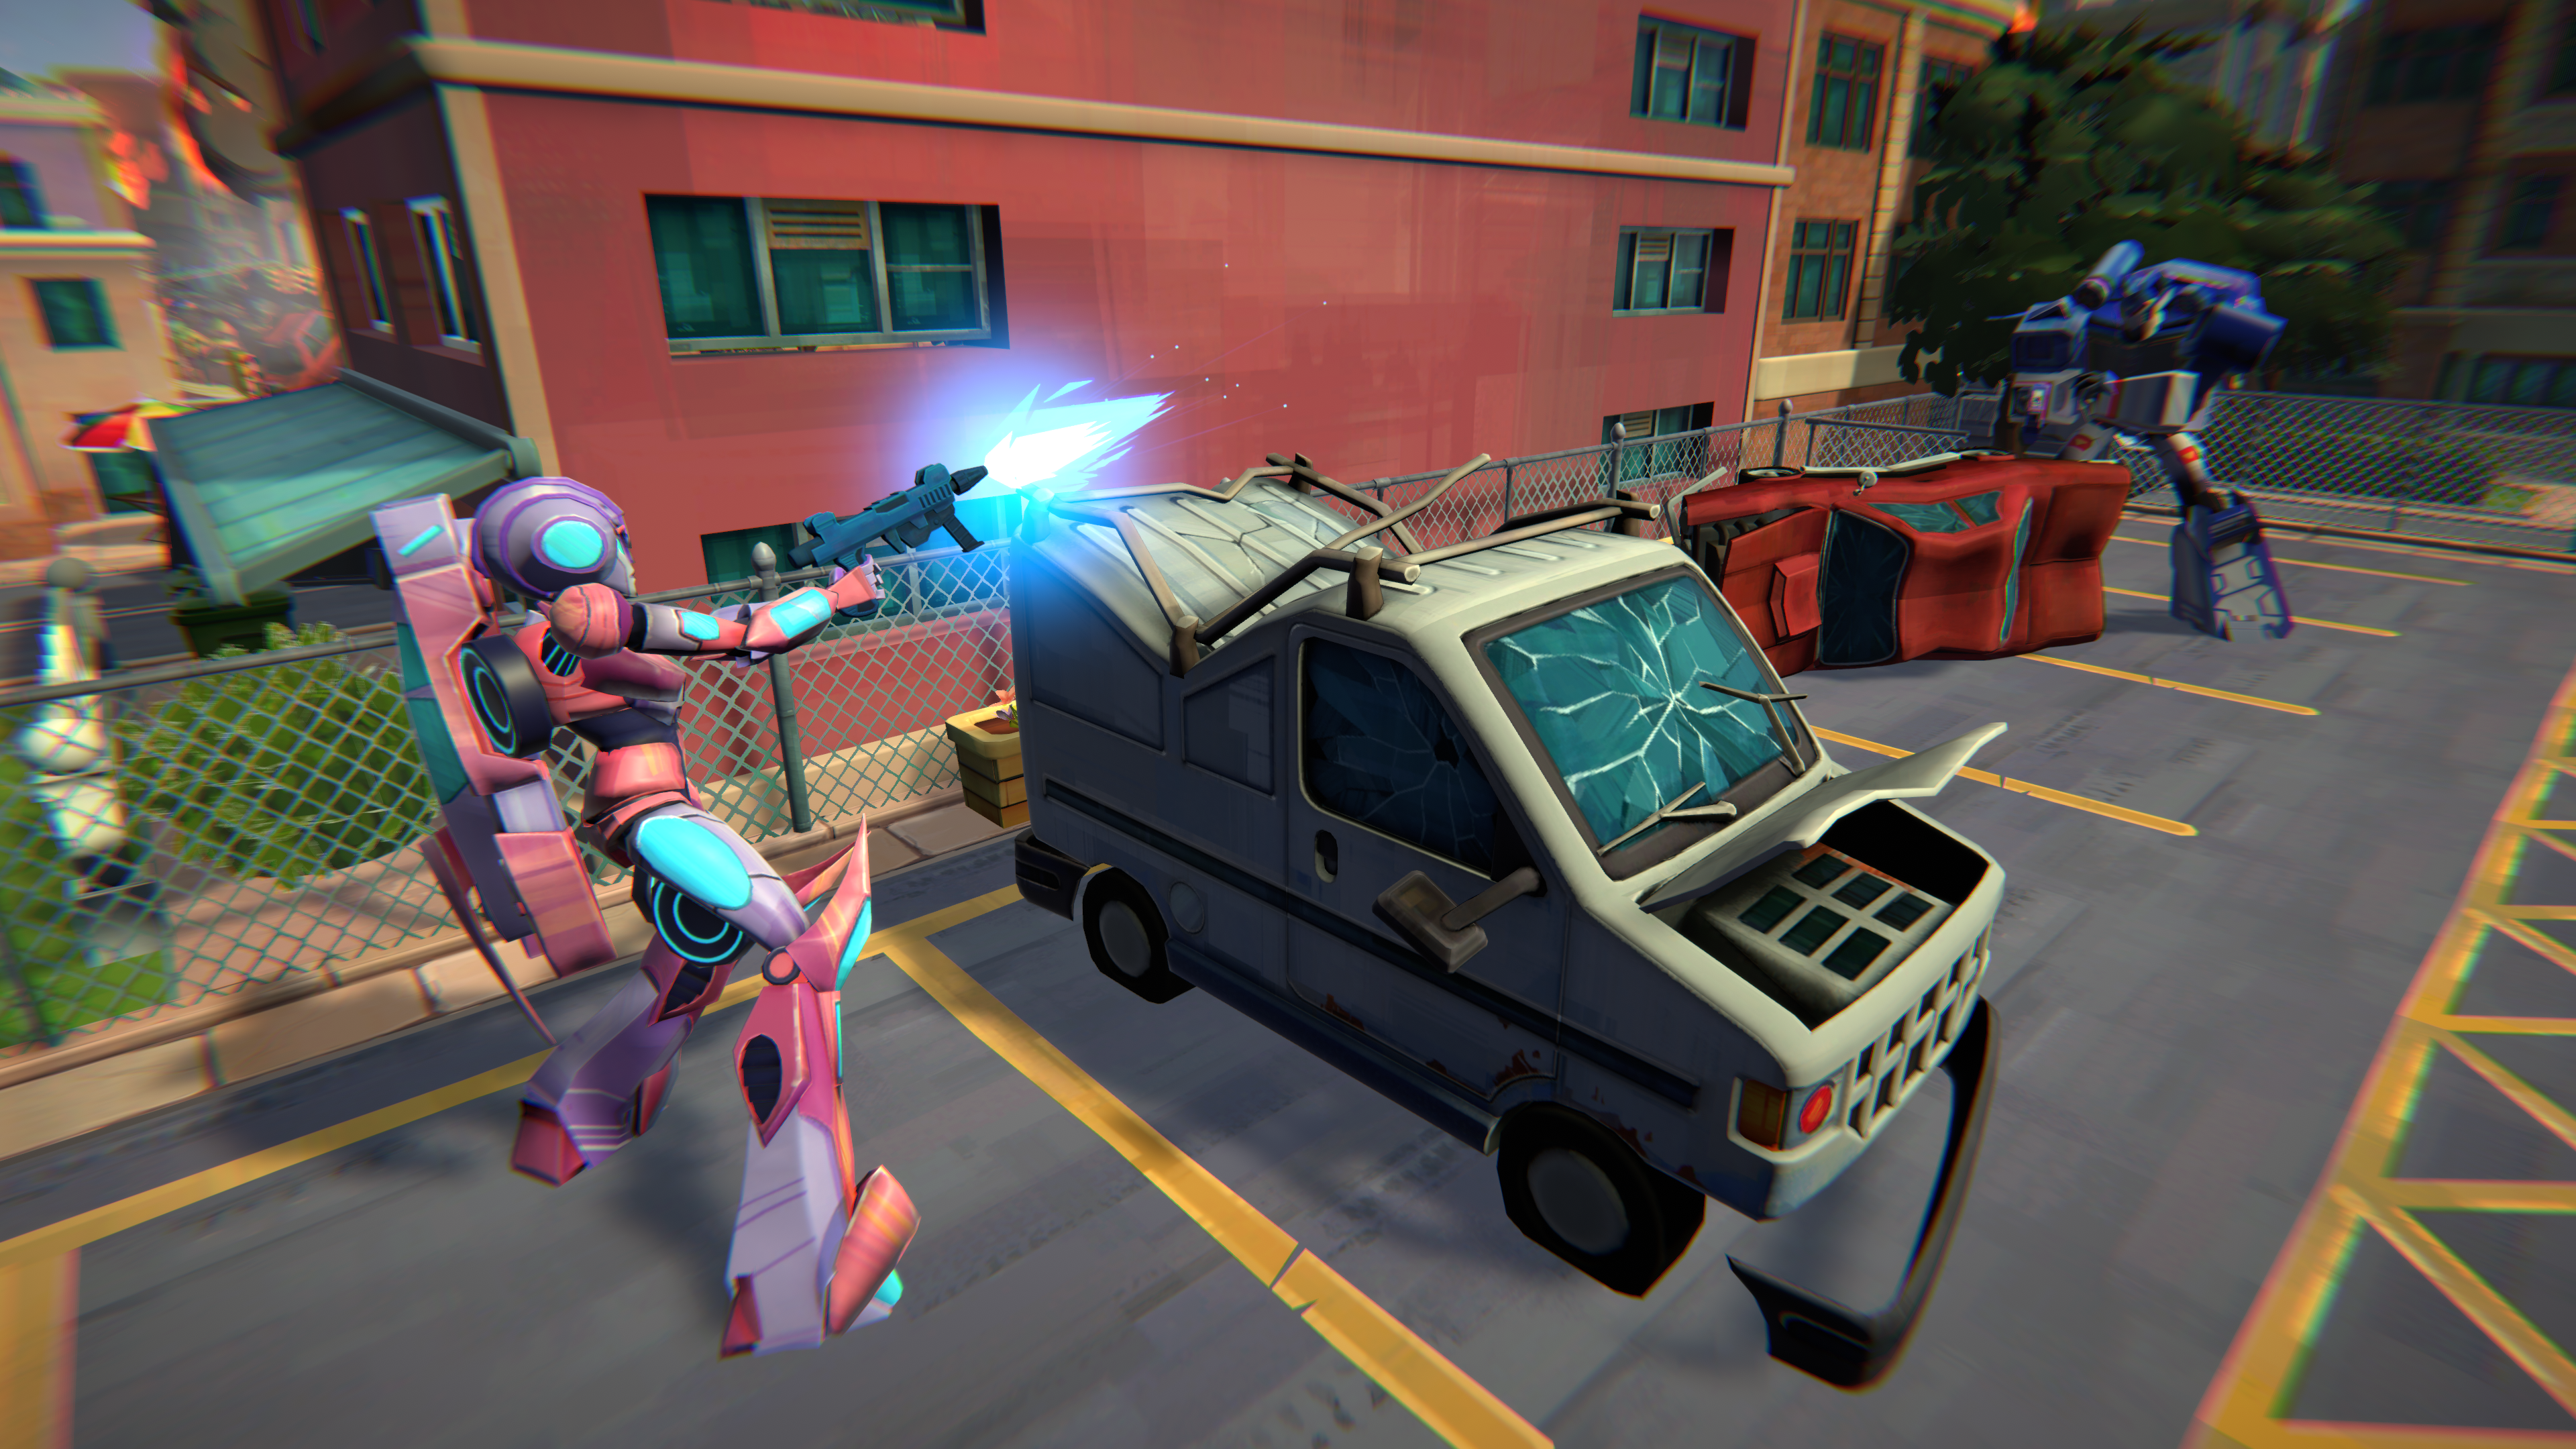 Screenshot of battle between transformers